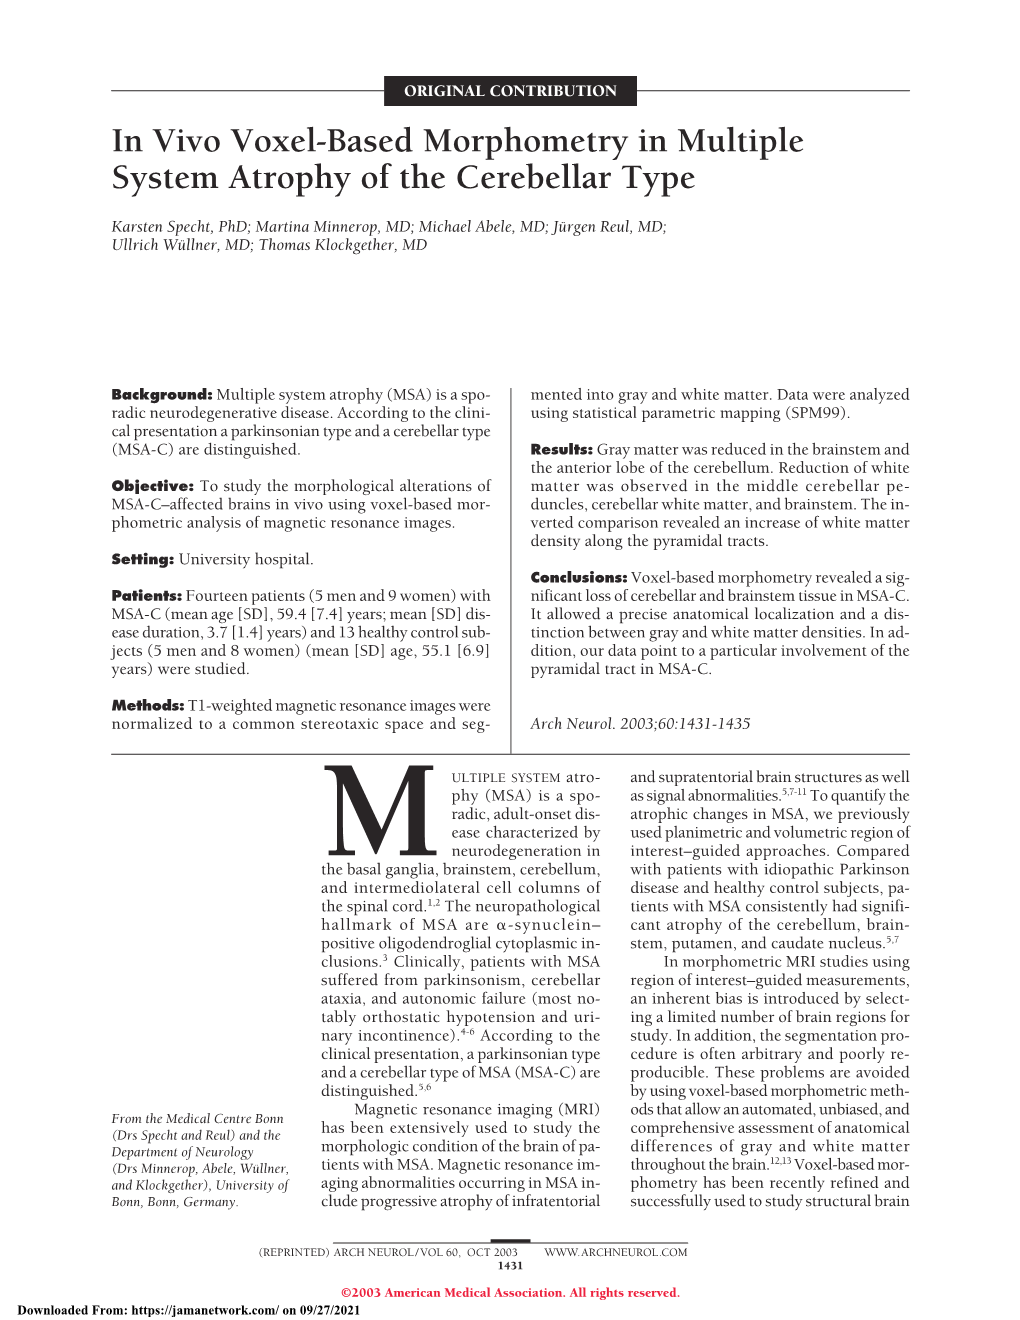 In Vivo Voxel-Based Morphometry in Multiple System Atrophy of the Cerebellar Type